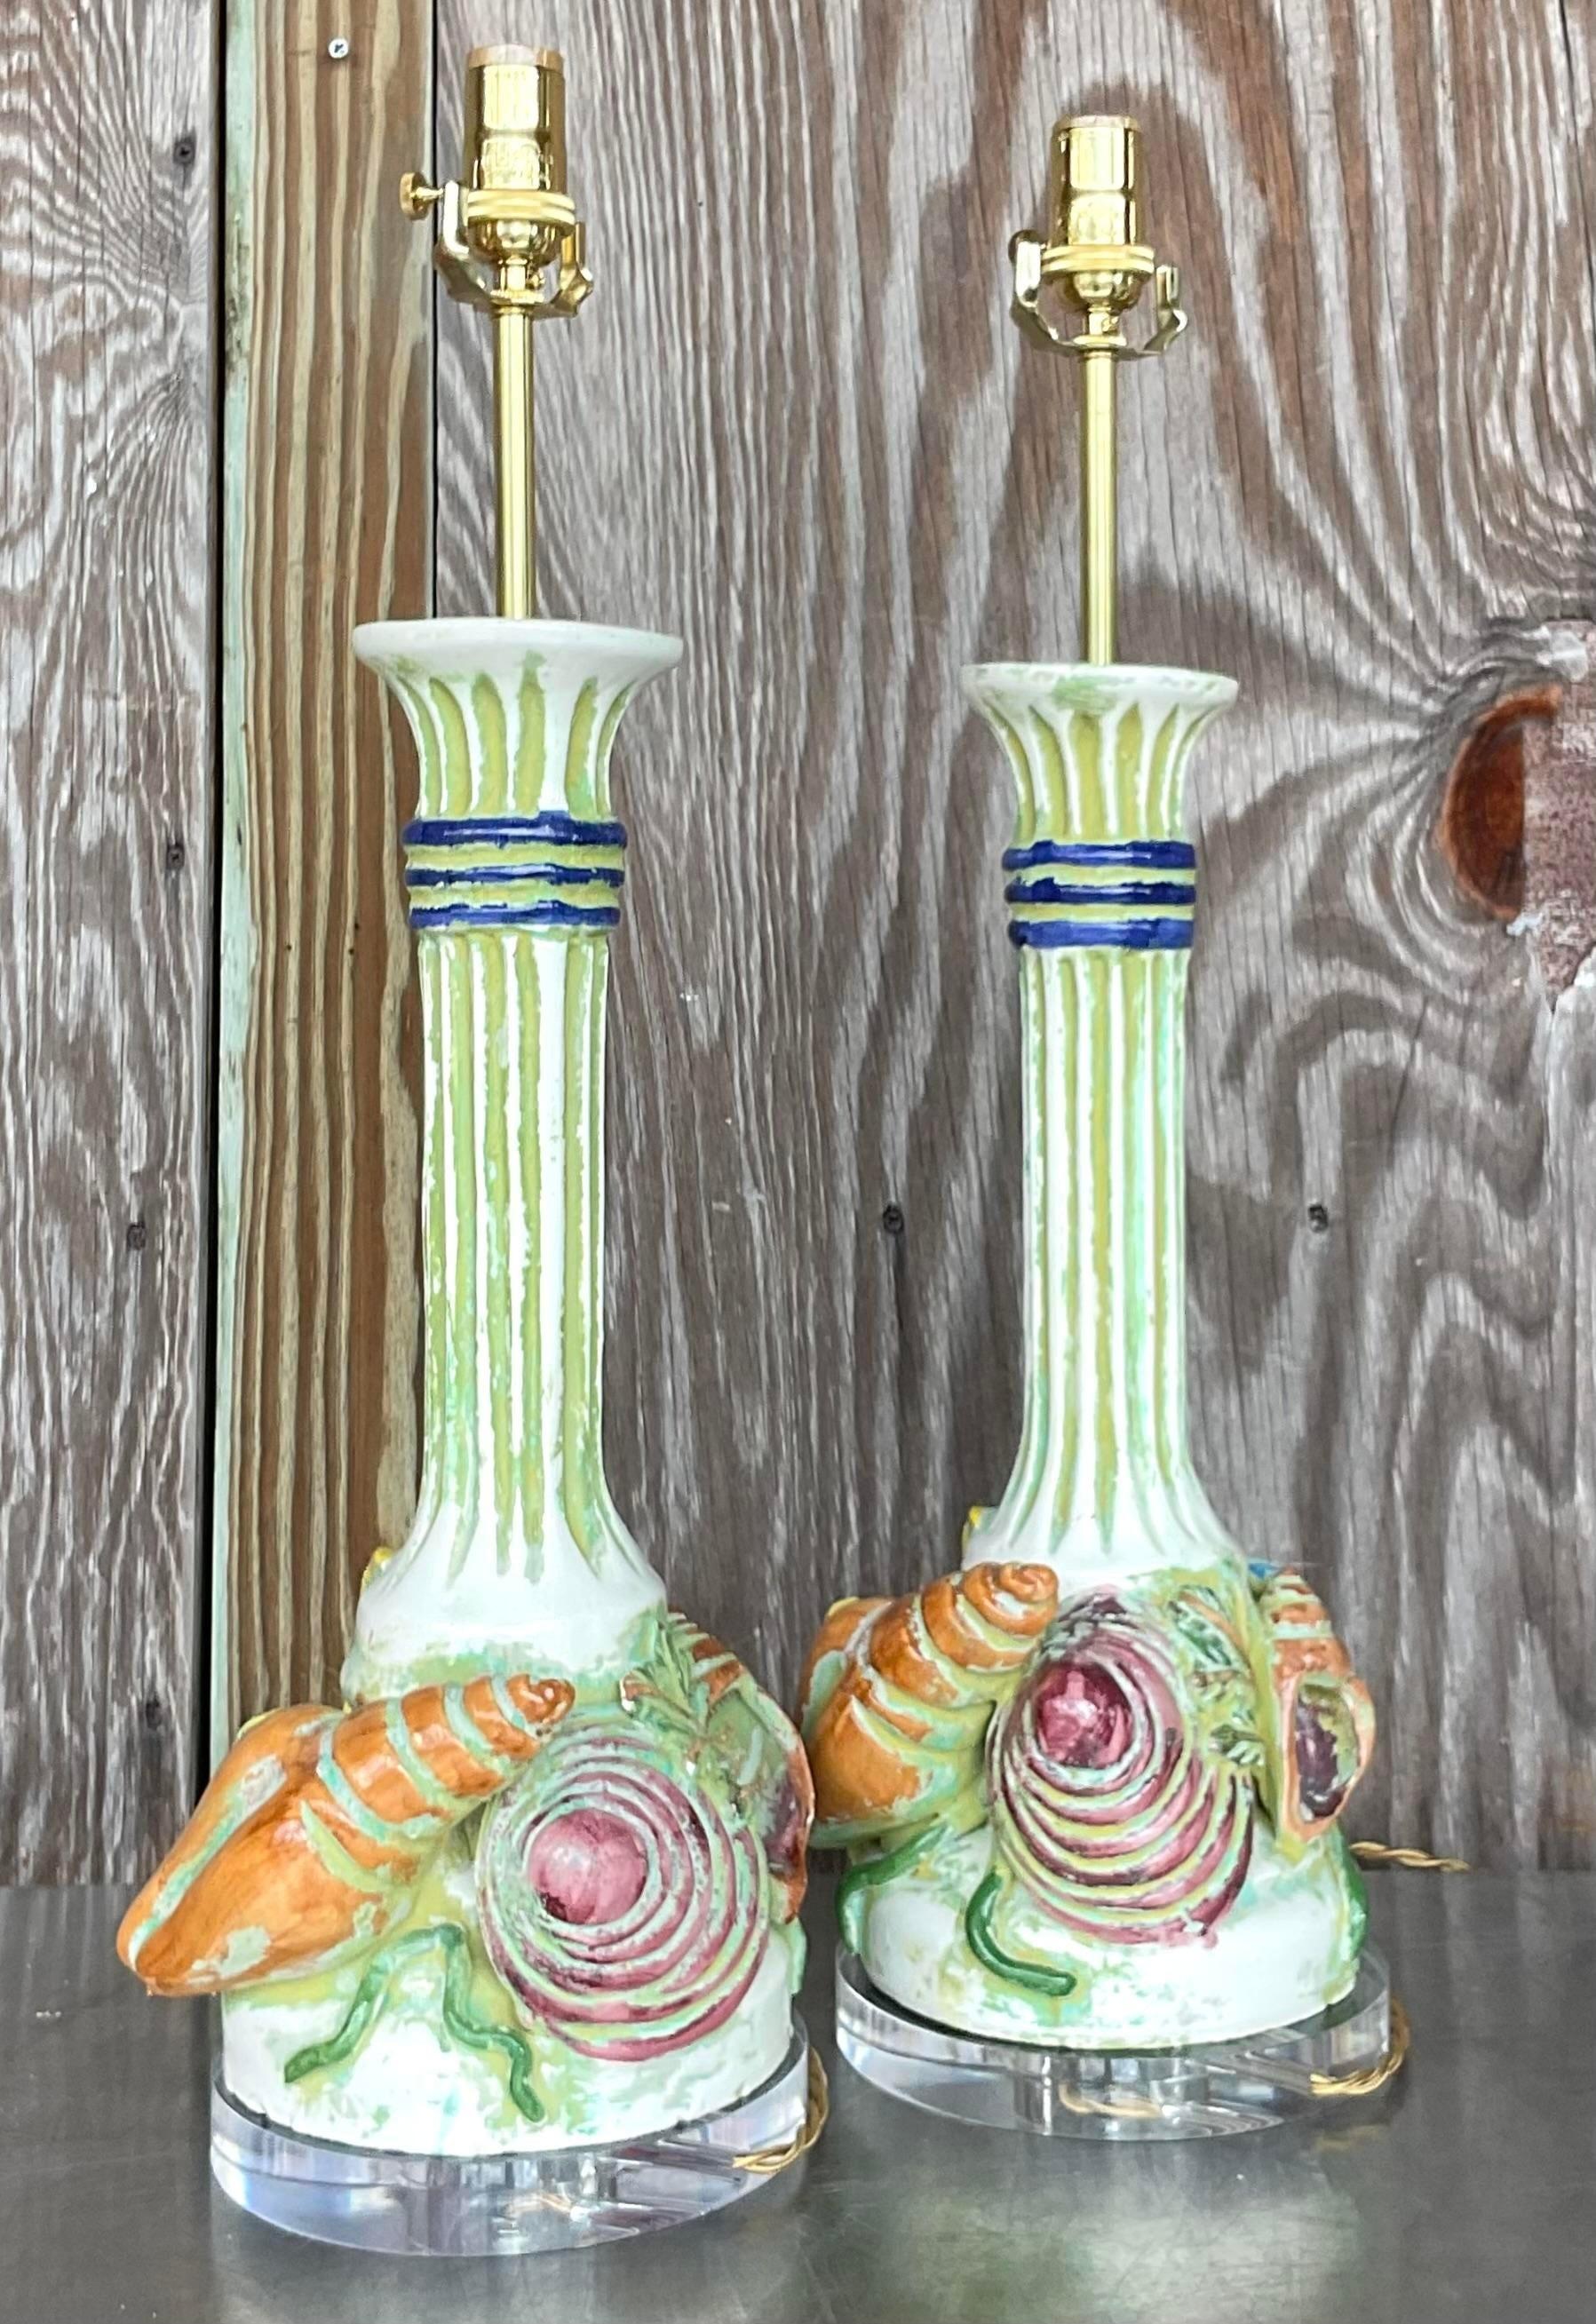 20th Century Vintage Boho Italian Hand Painted Shells Ceramic Lamps - a Pair